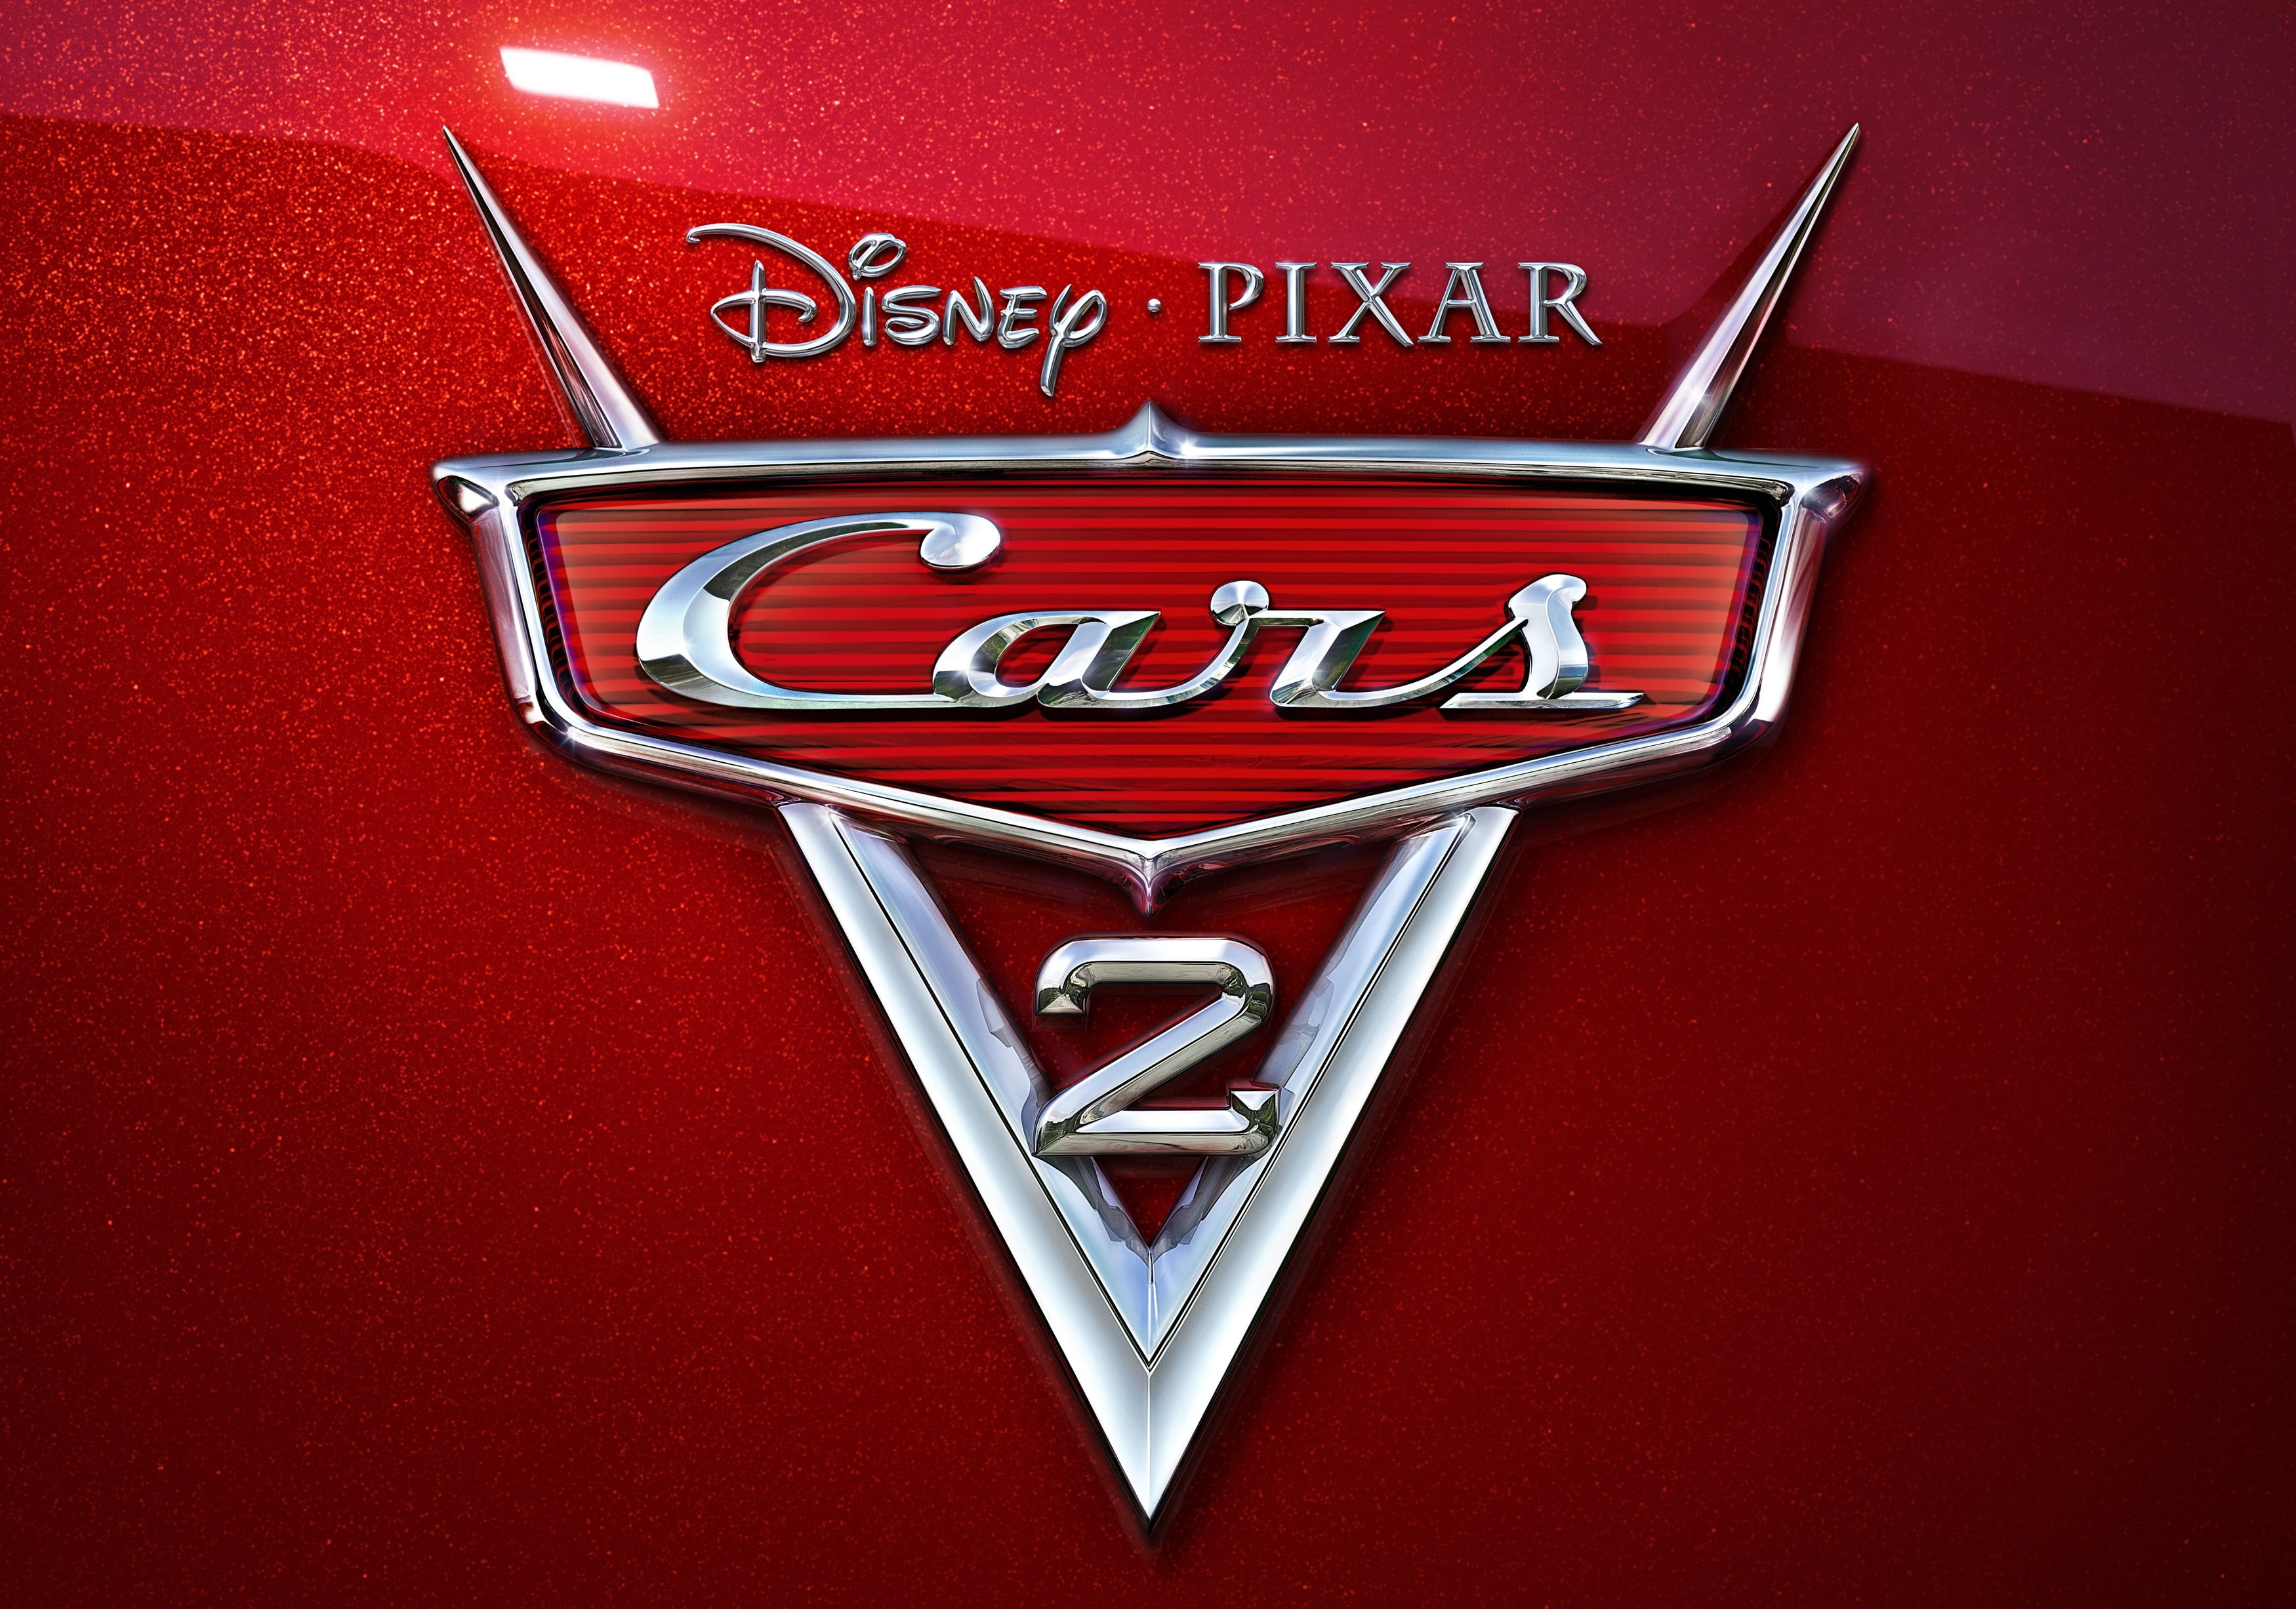 Disney Pixar Cars 2 wallpaper, cartoon, emblem, chrome, red mother of pearl